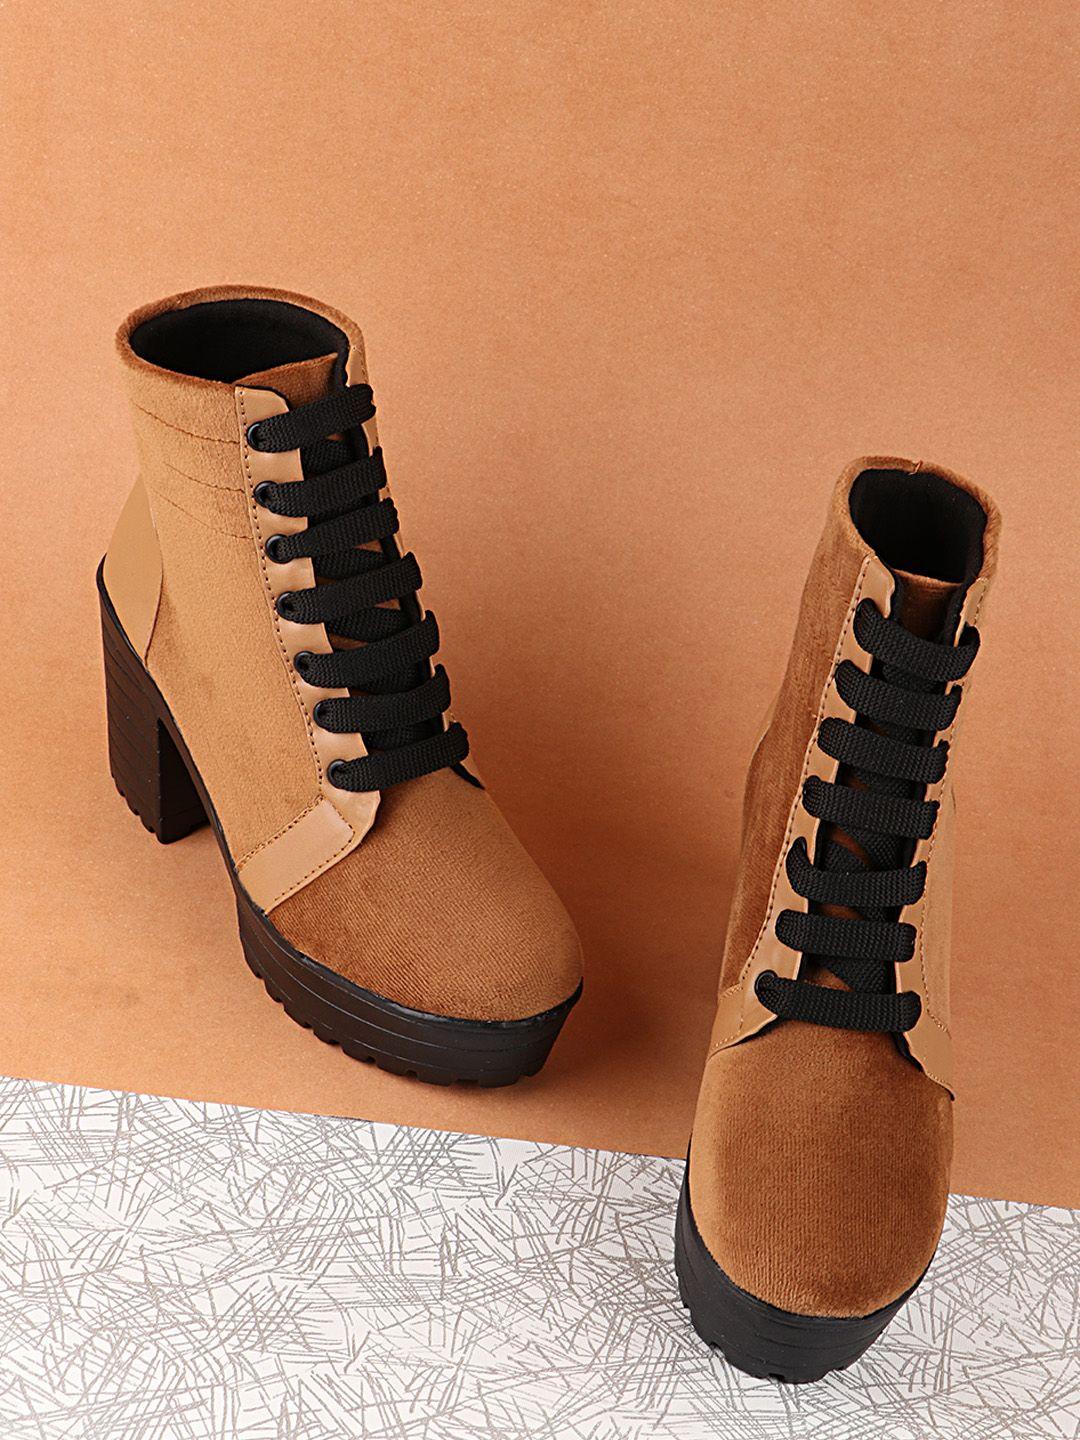 shoetopia tan suede wedge heeled boots